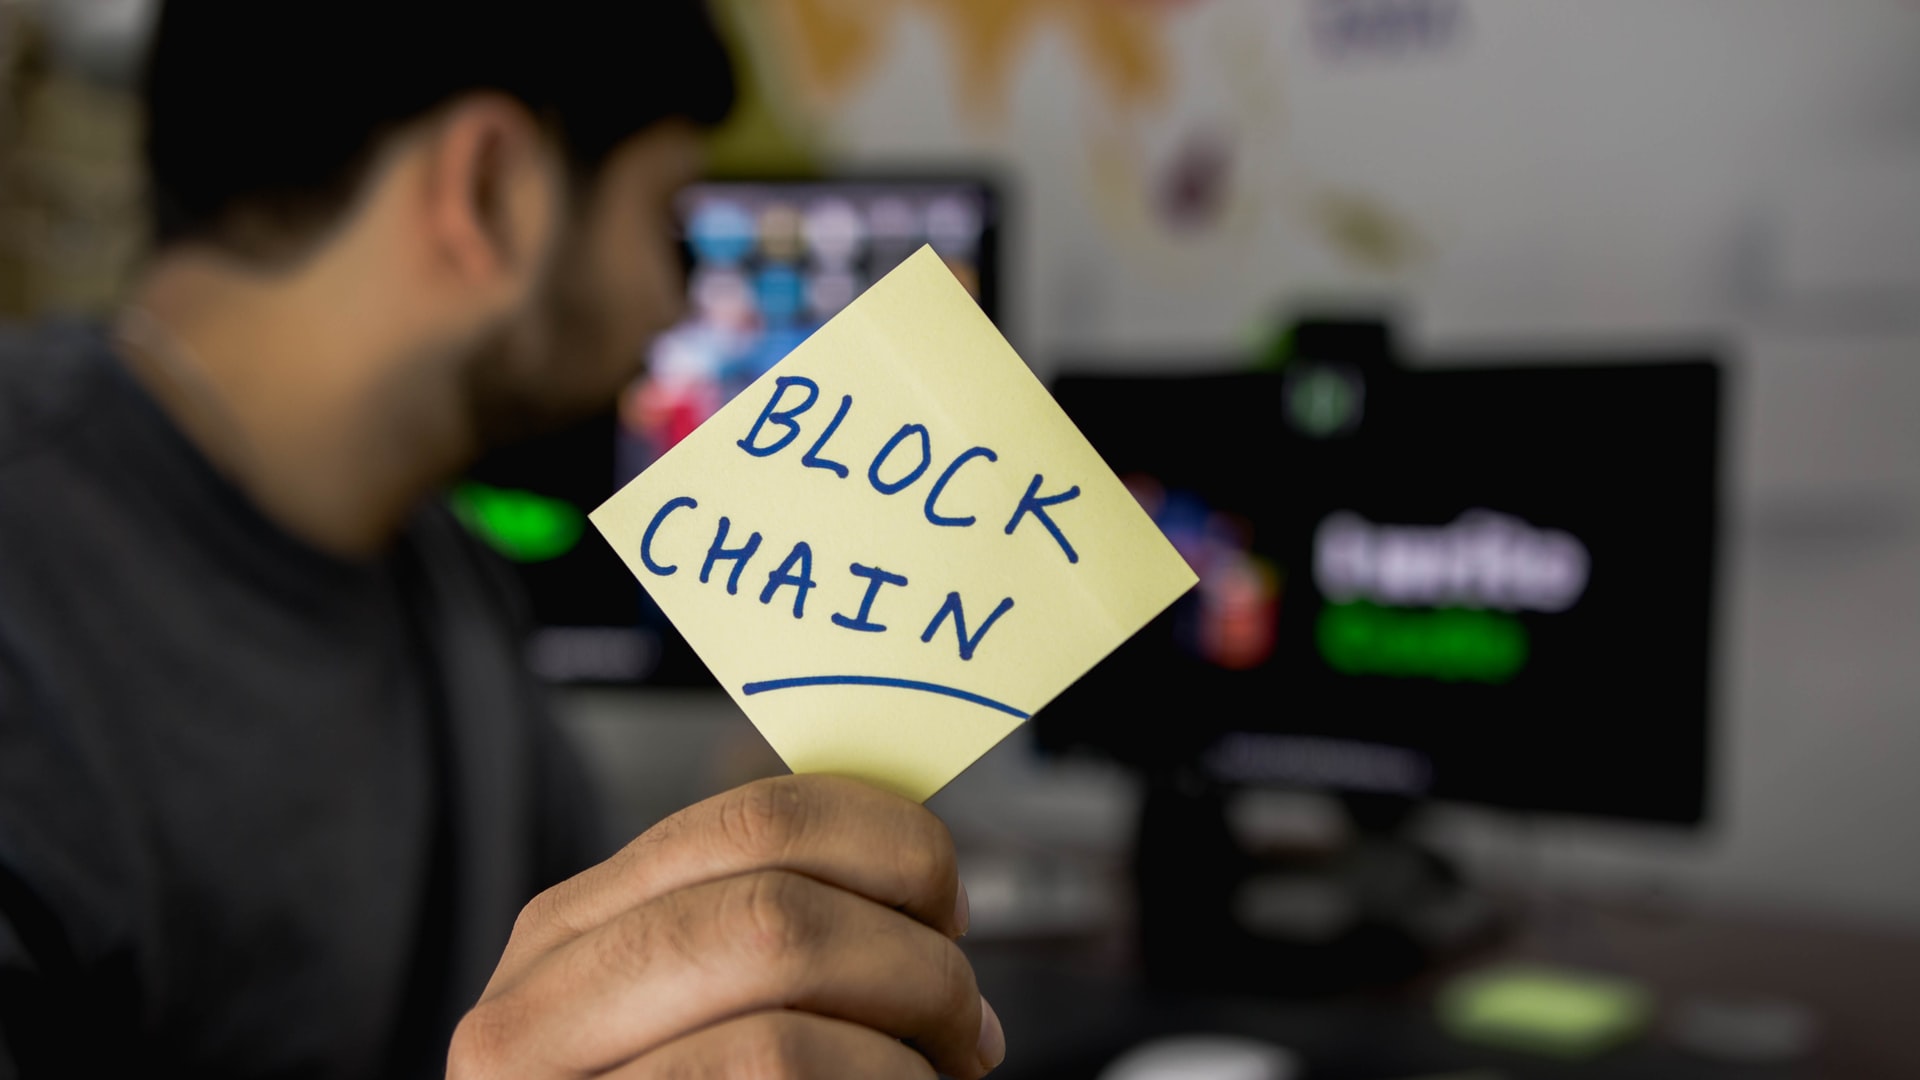 Blockchain written on a sticky note